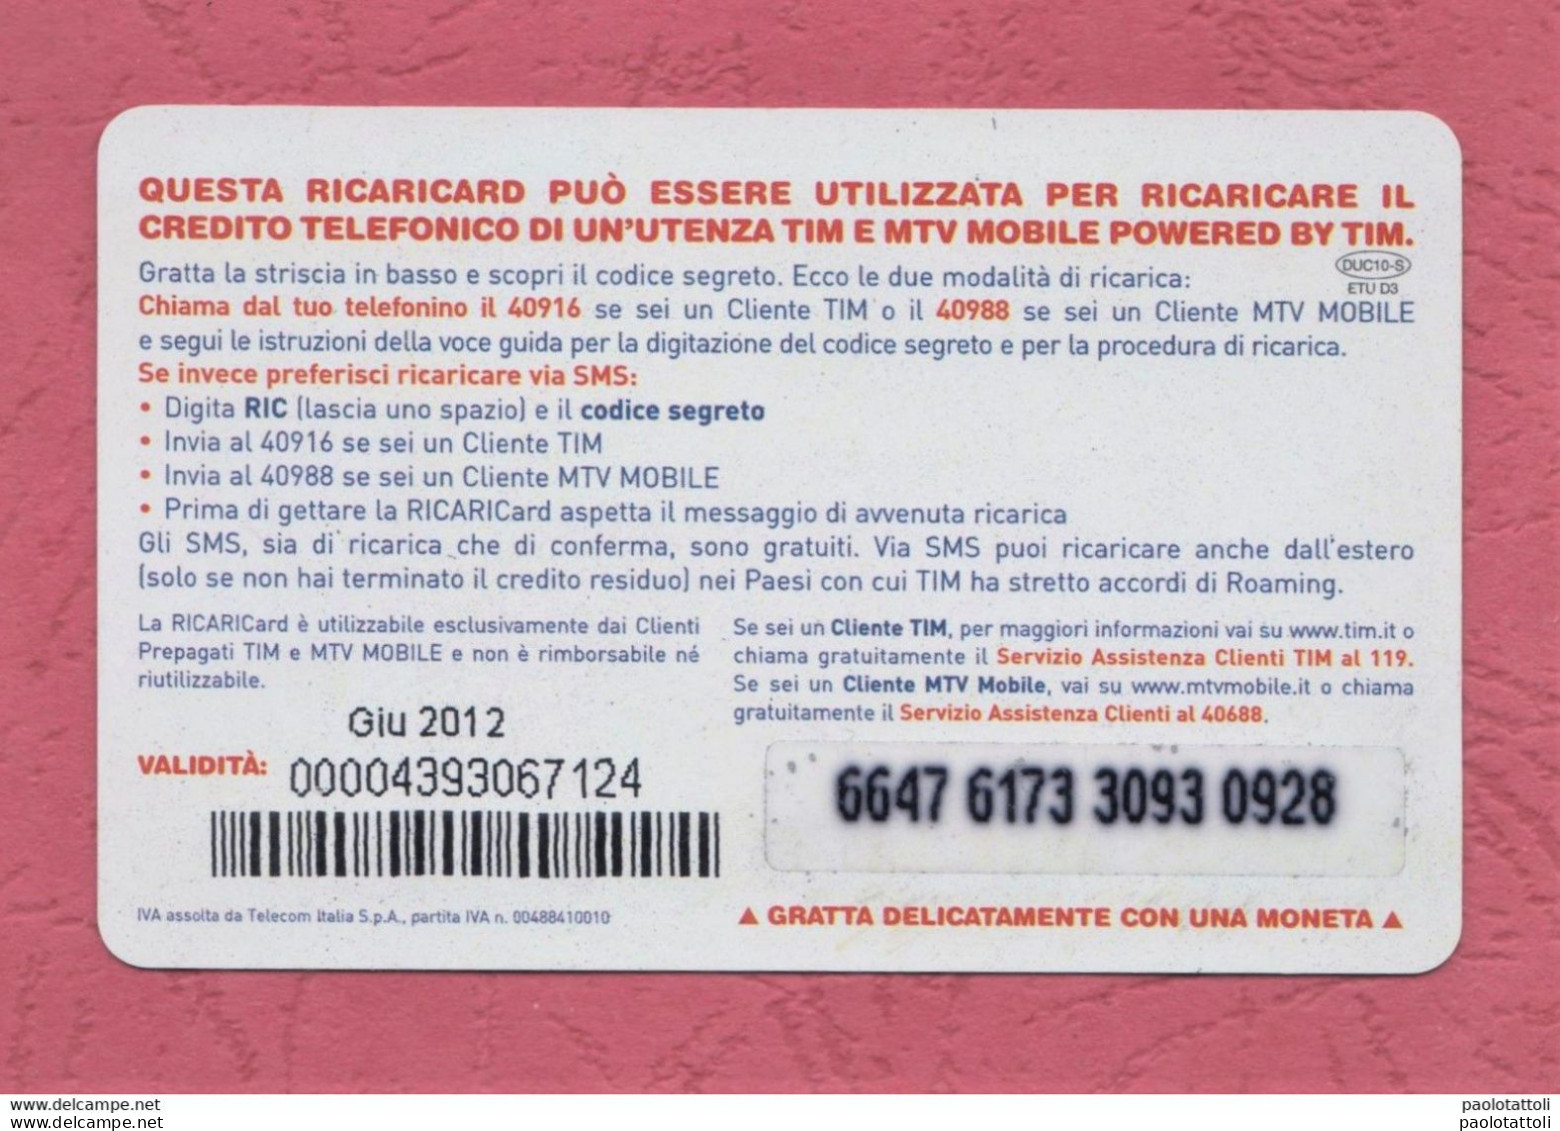 Italia, Italy- Ricarica Telefonica,TIM  Mobile Pop Up Card- Moto GP 2010. Round 01, Quatar 11.4.2010- 10 Euro. - Cartes GSM Prépayées & Recharges